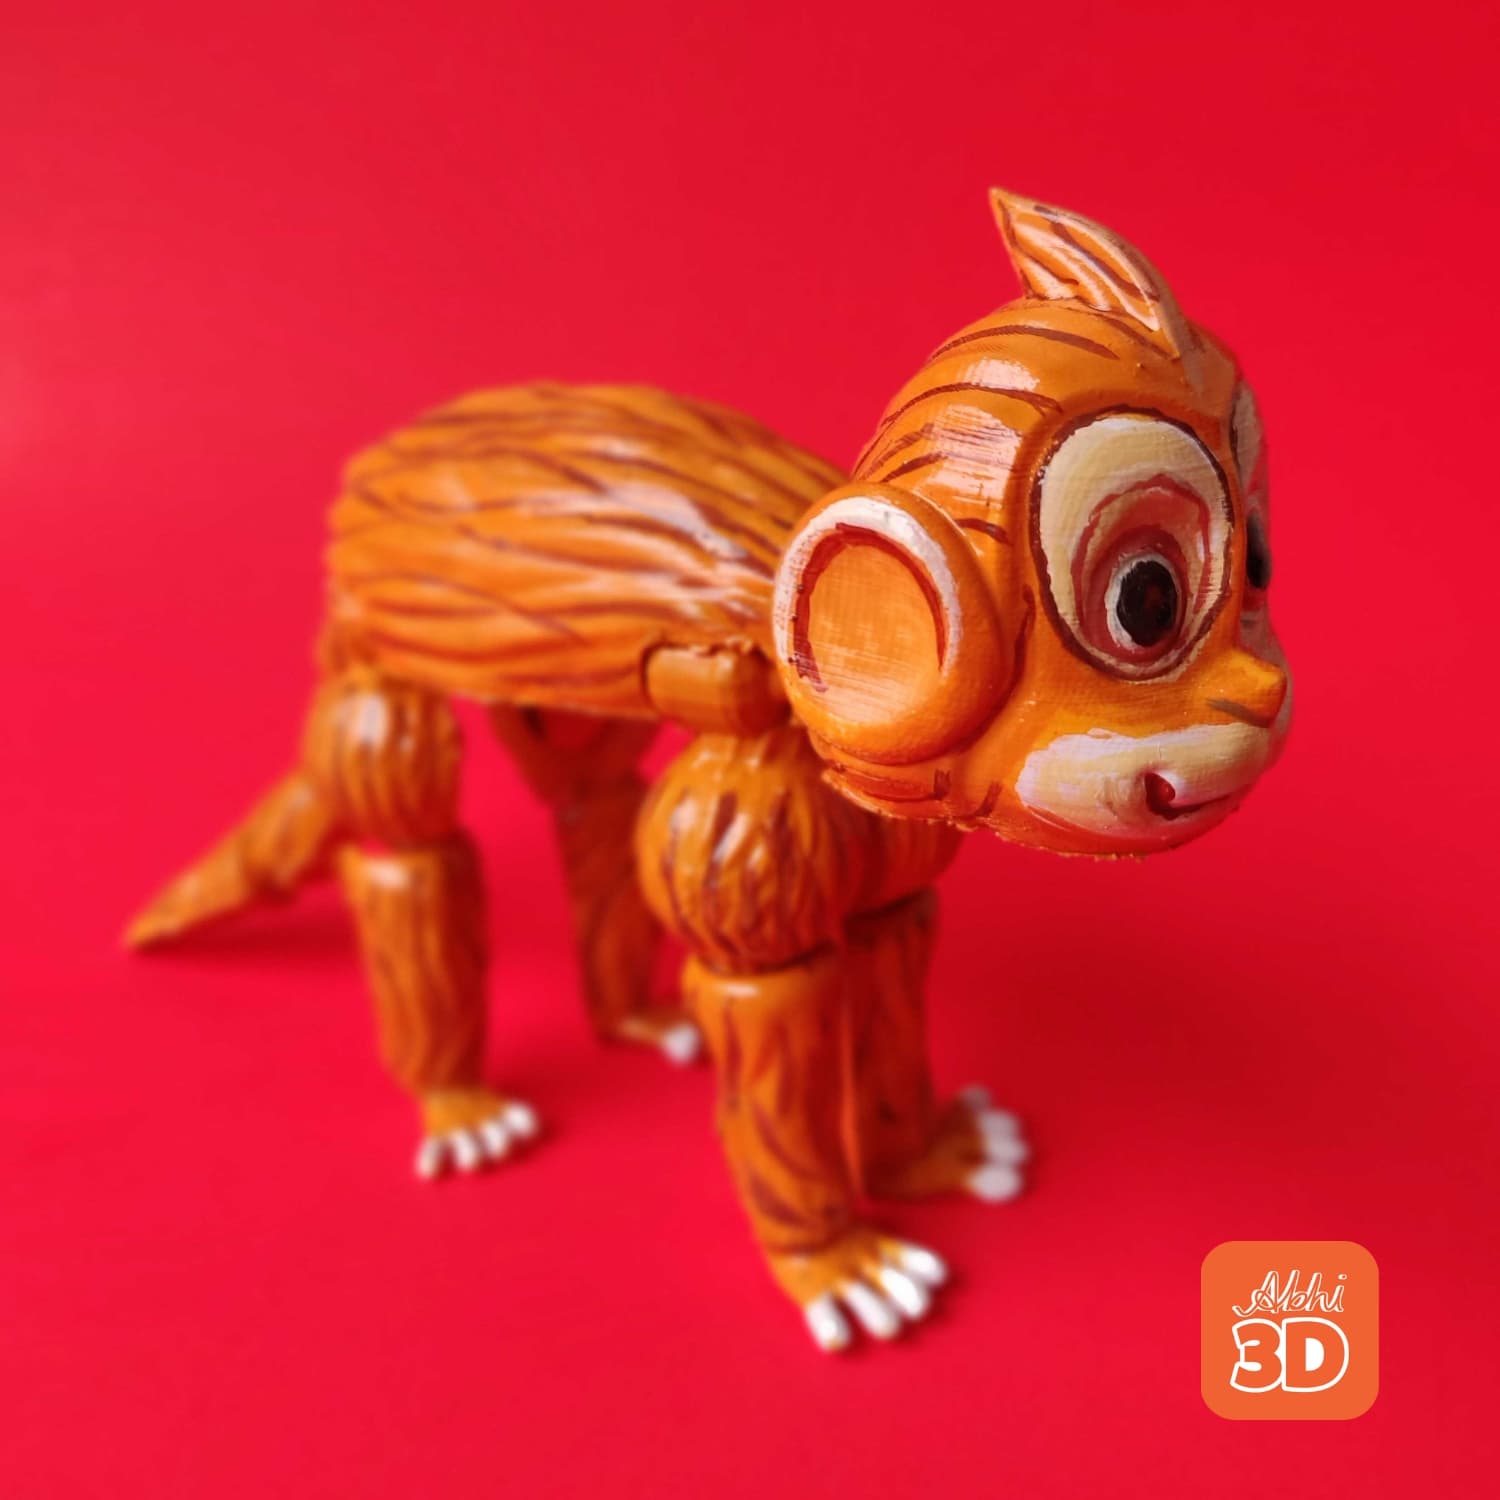 Monkey STL File For 3D Printing